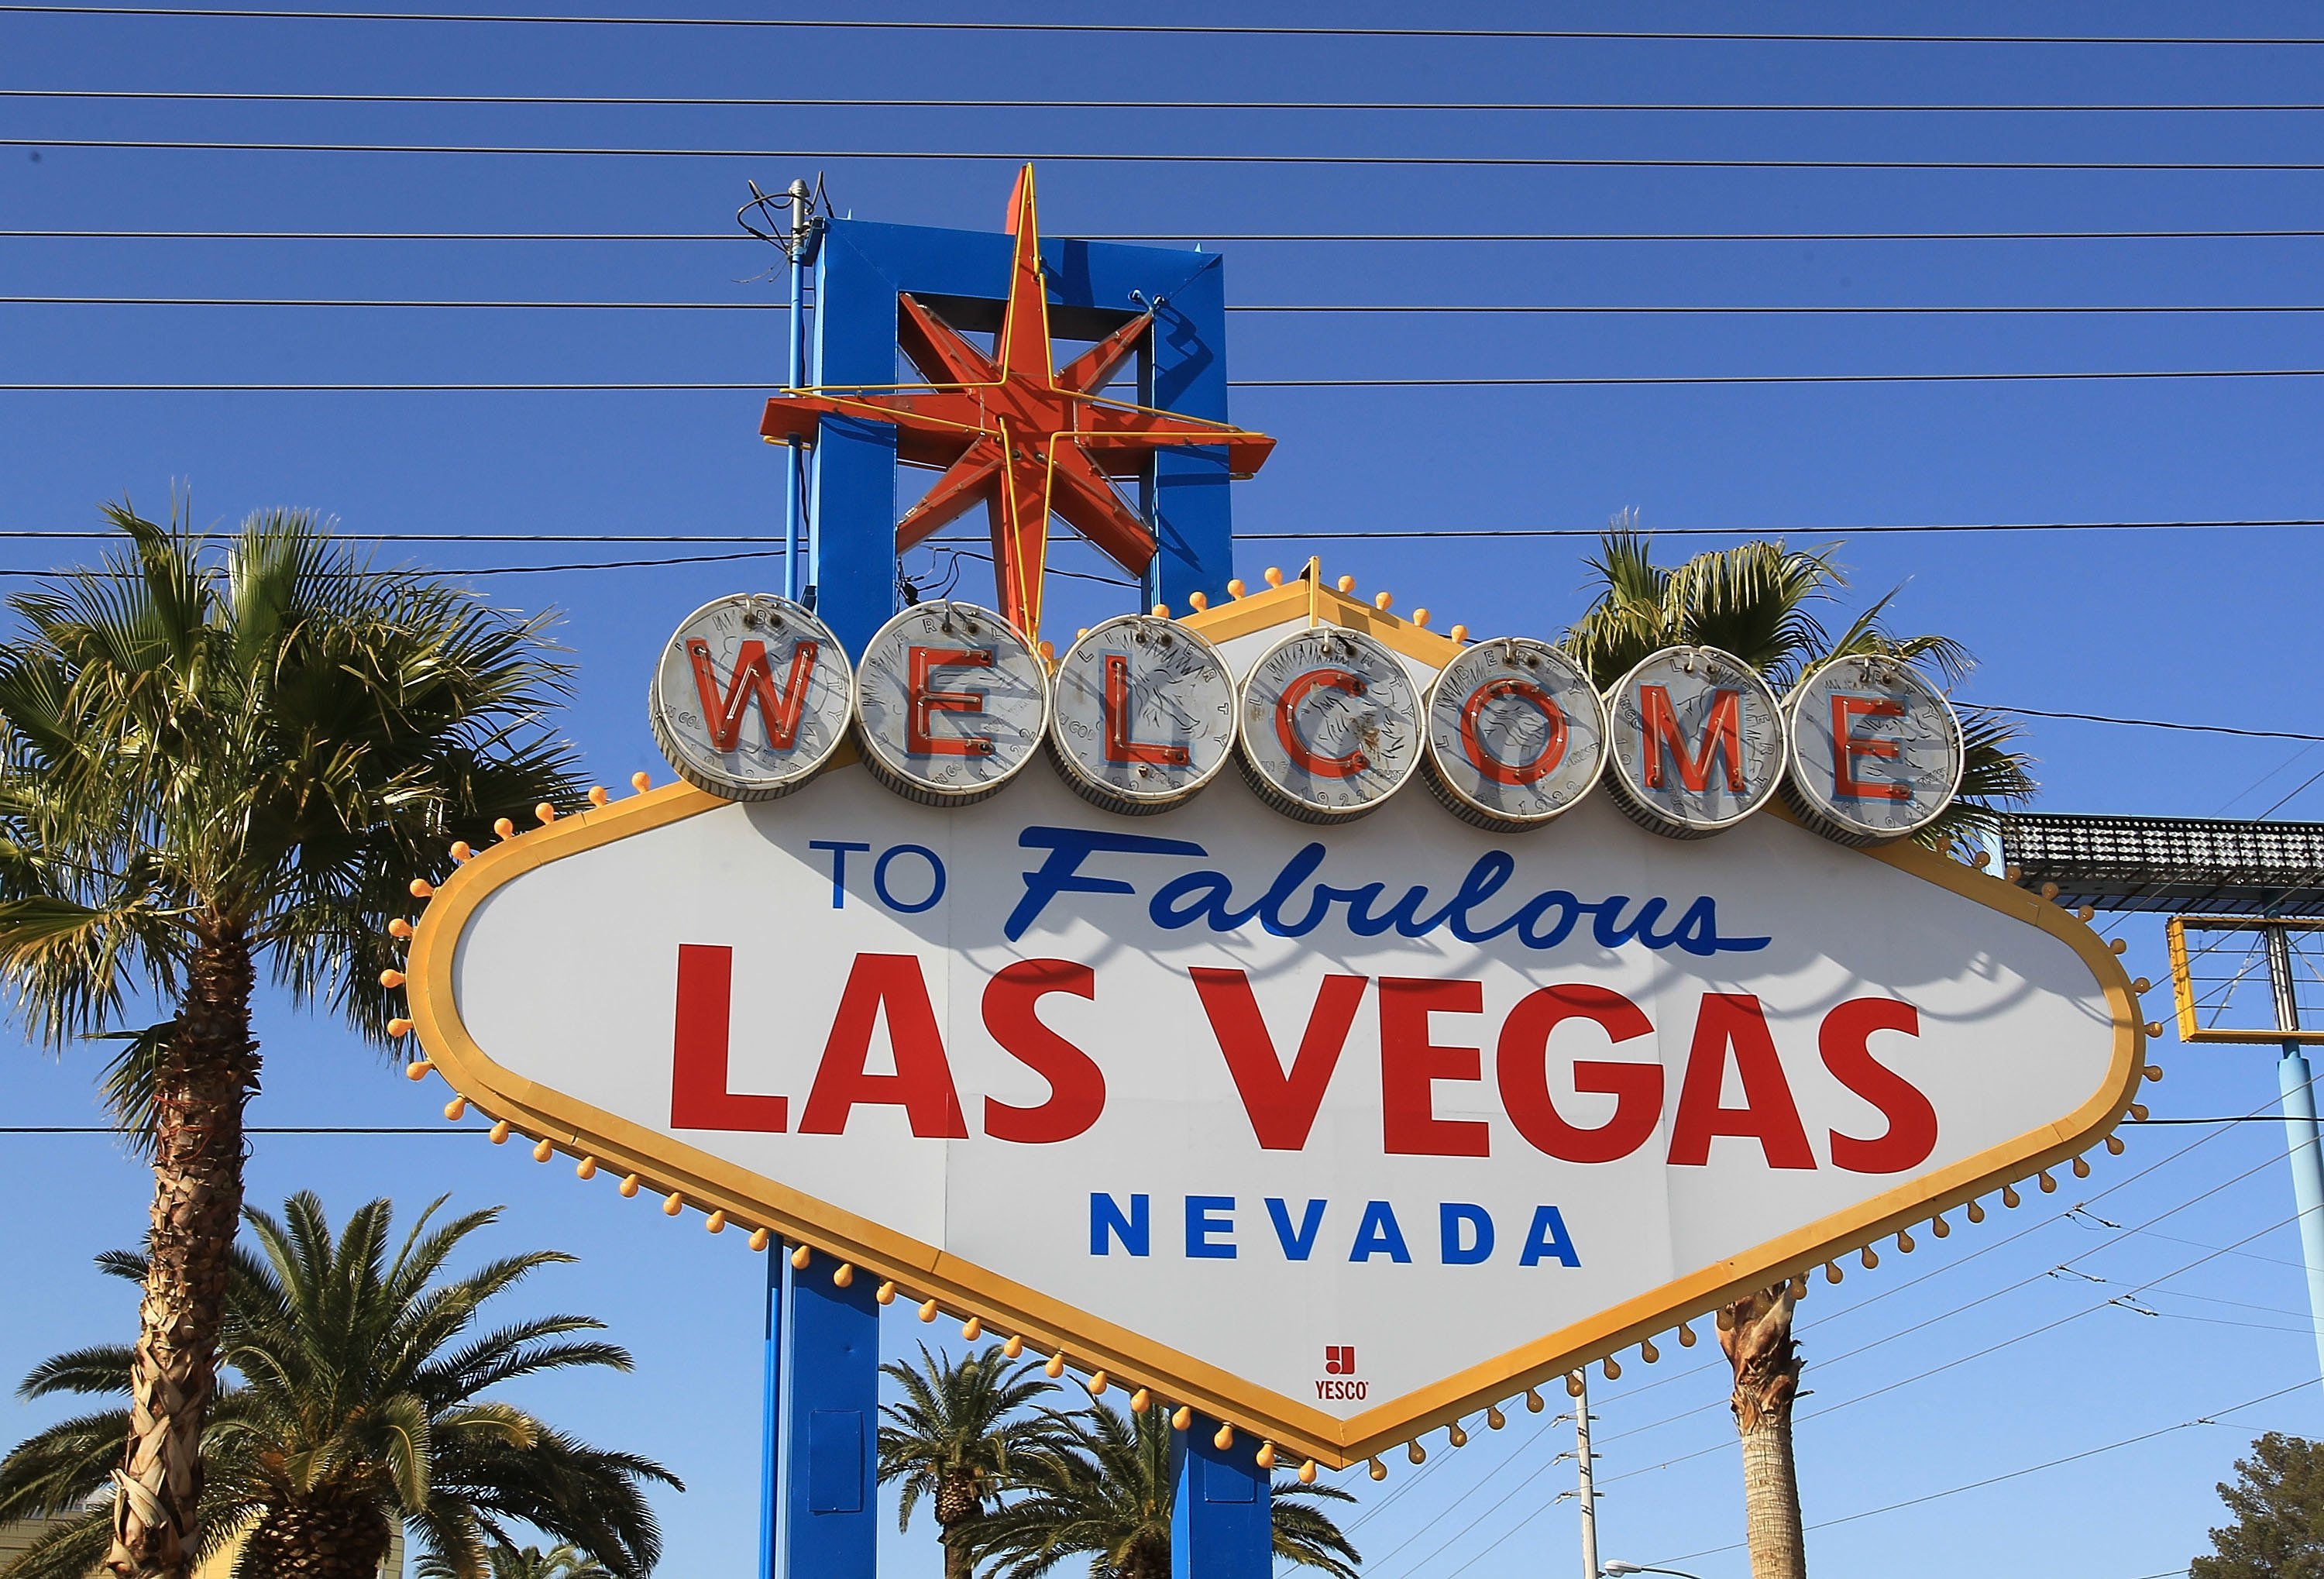 The Las Vegas sign near palm trees